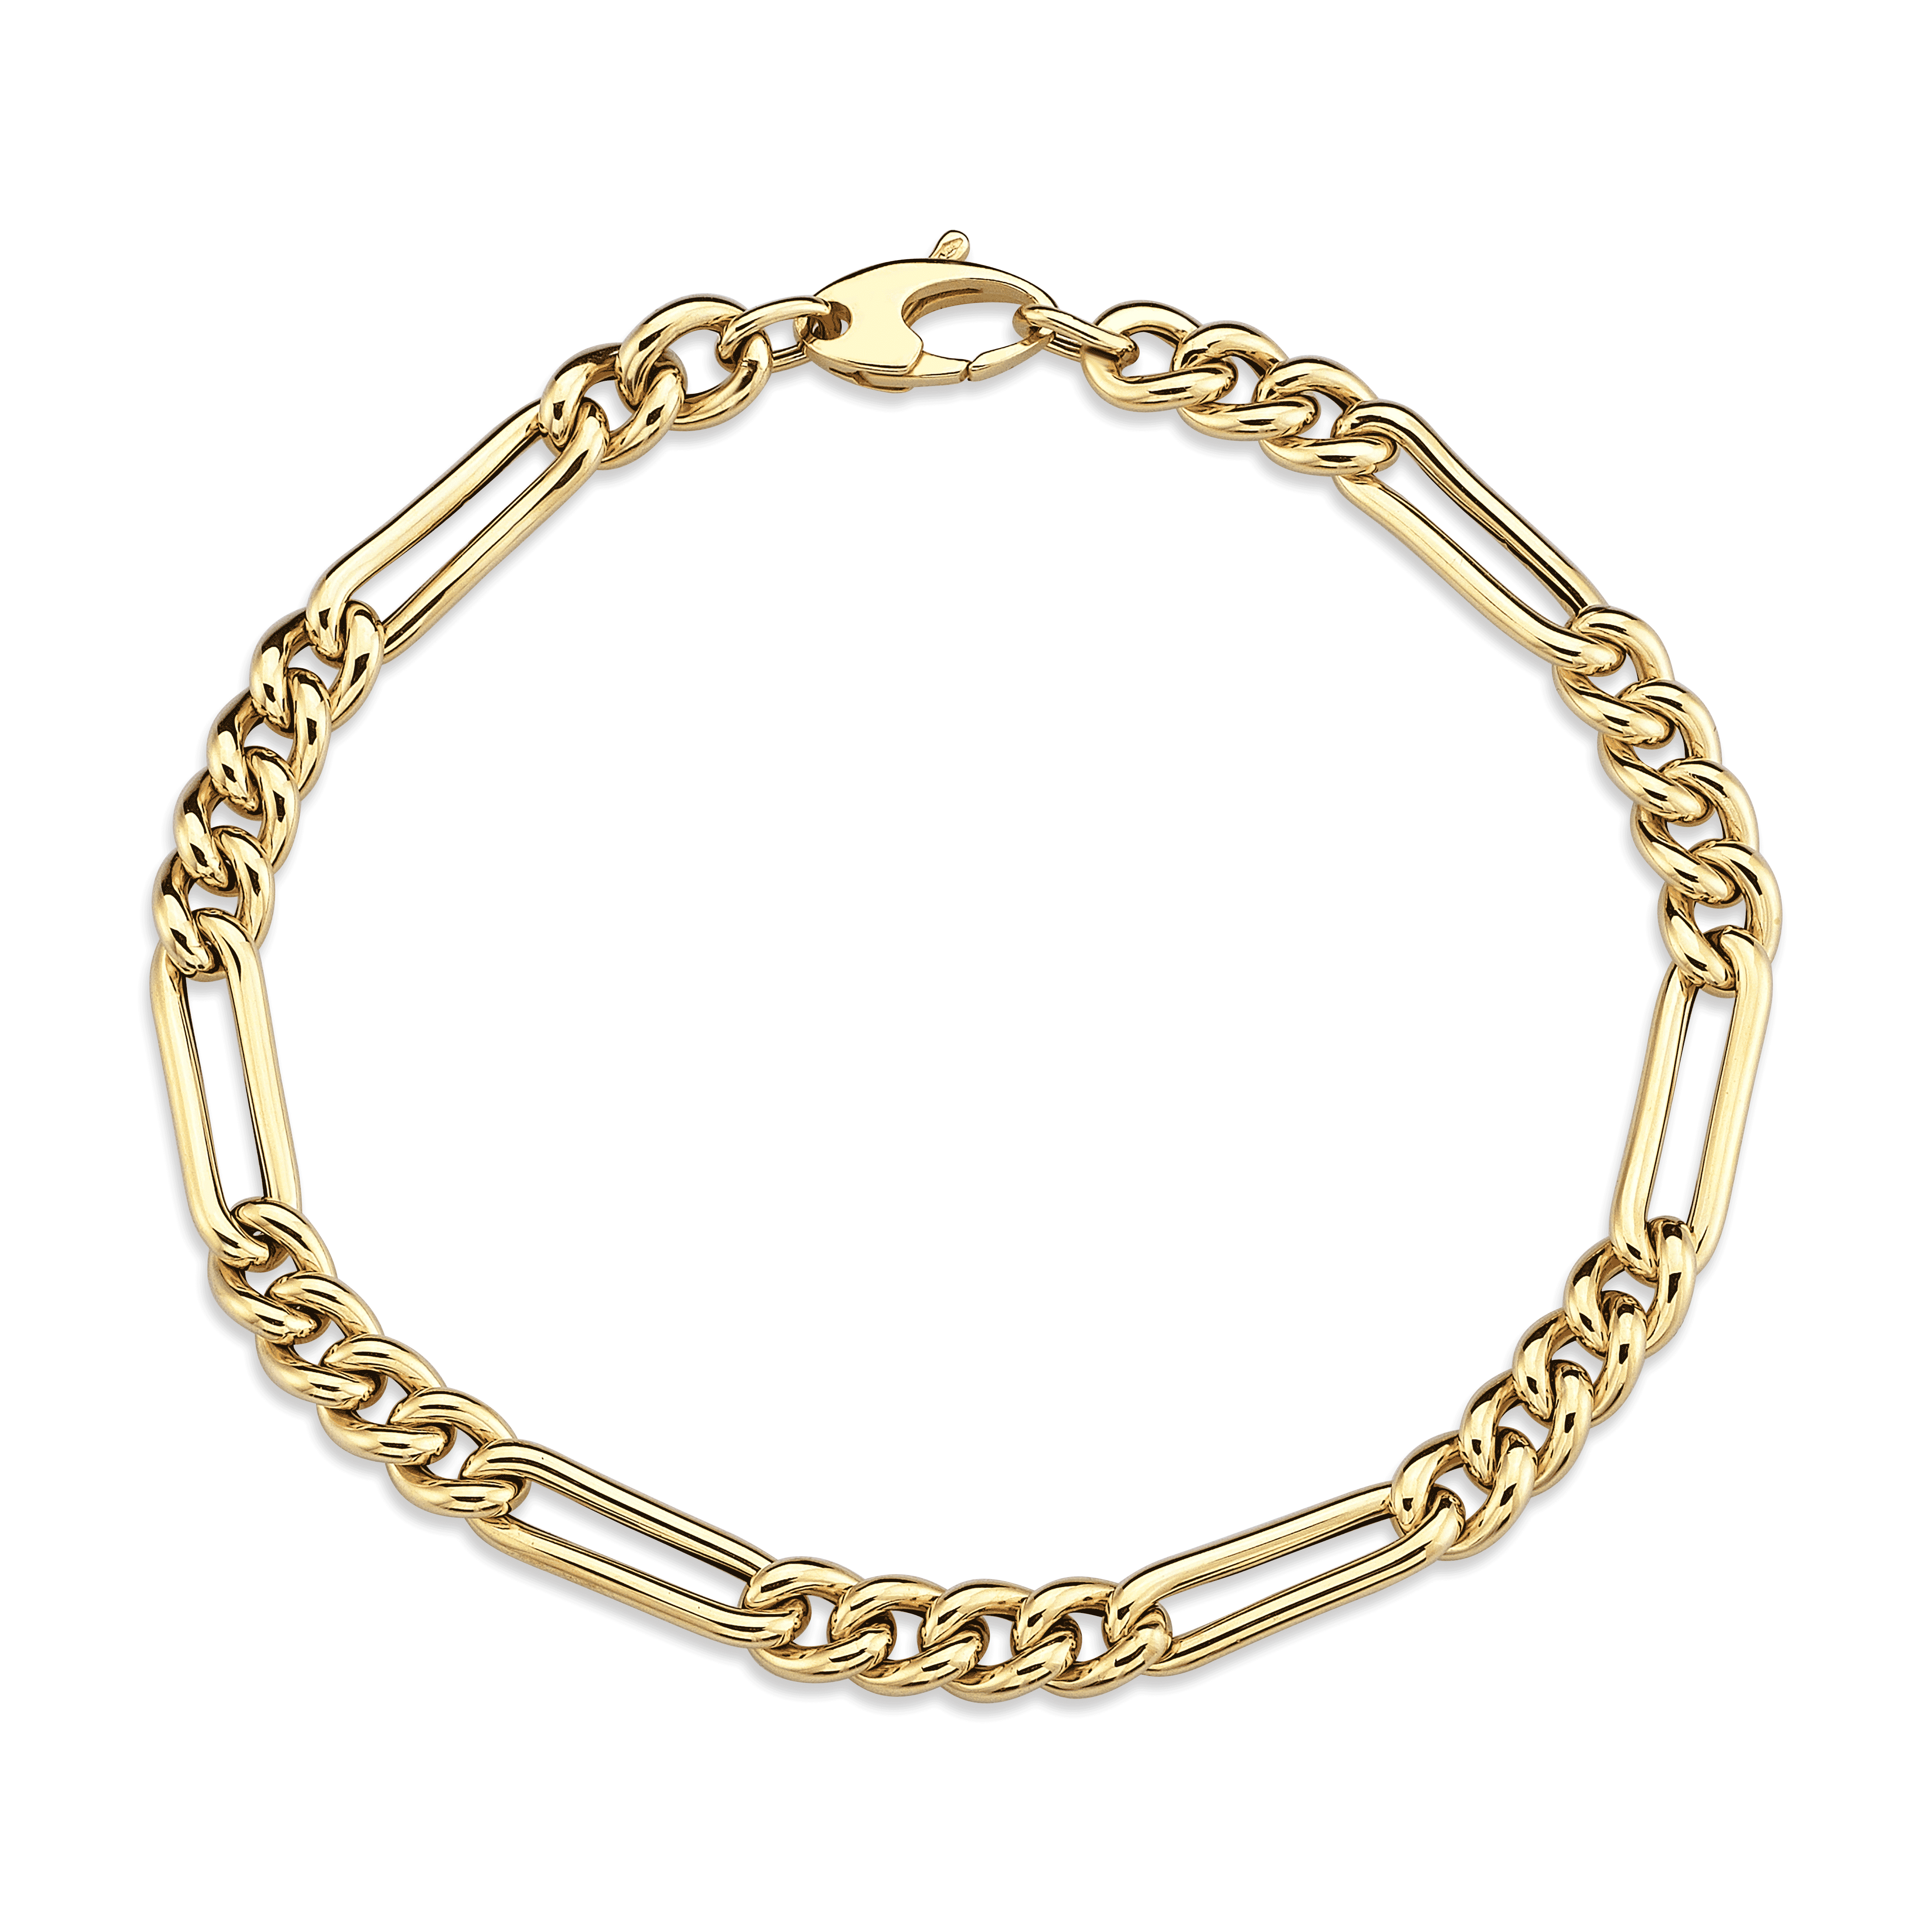 Retro Links Chain Bracelet - 1